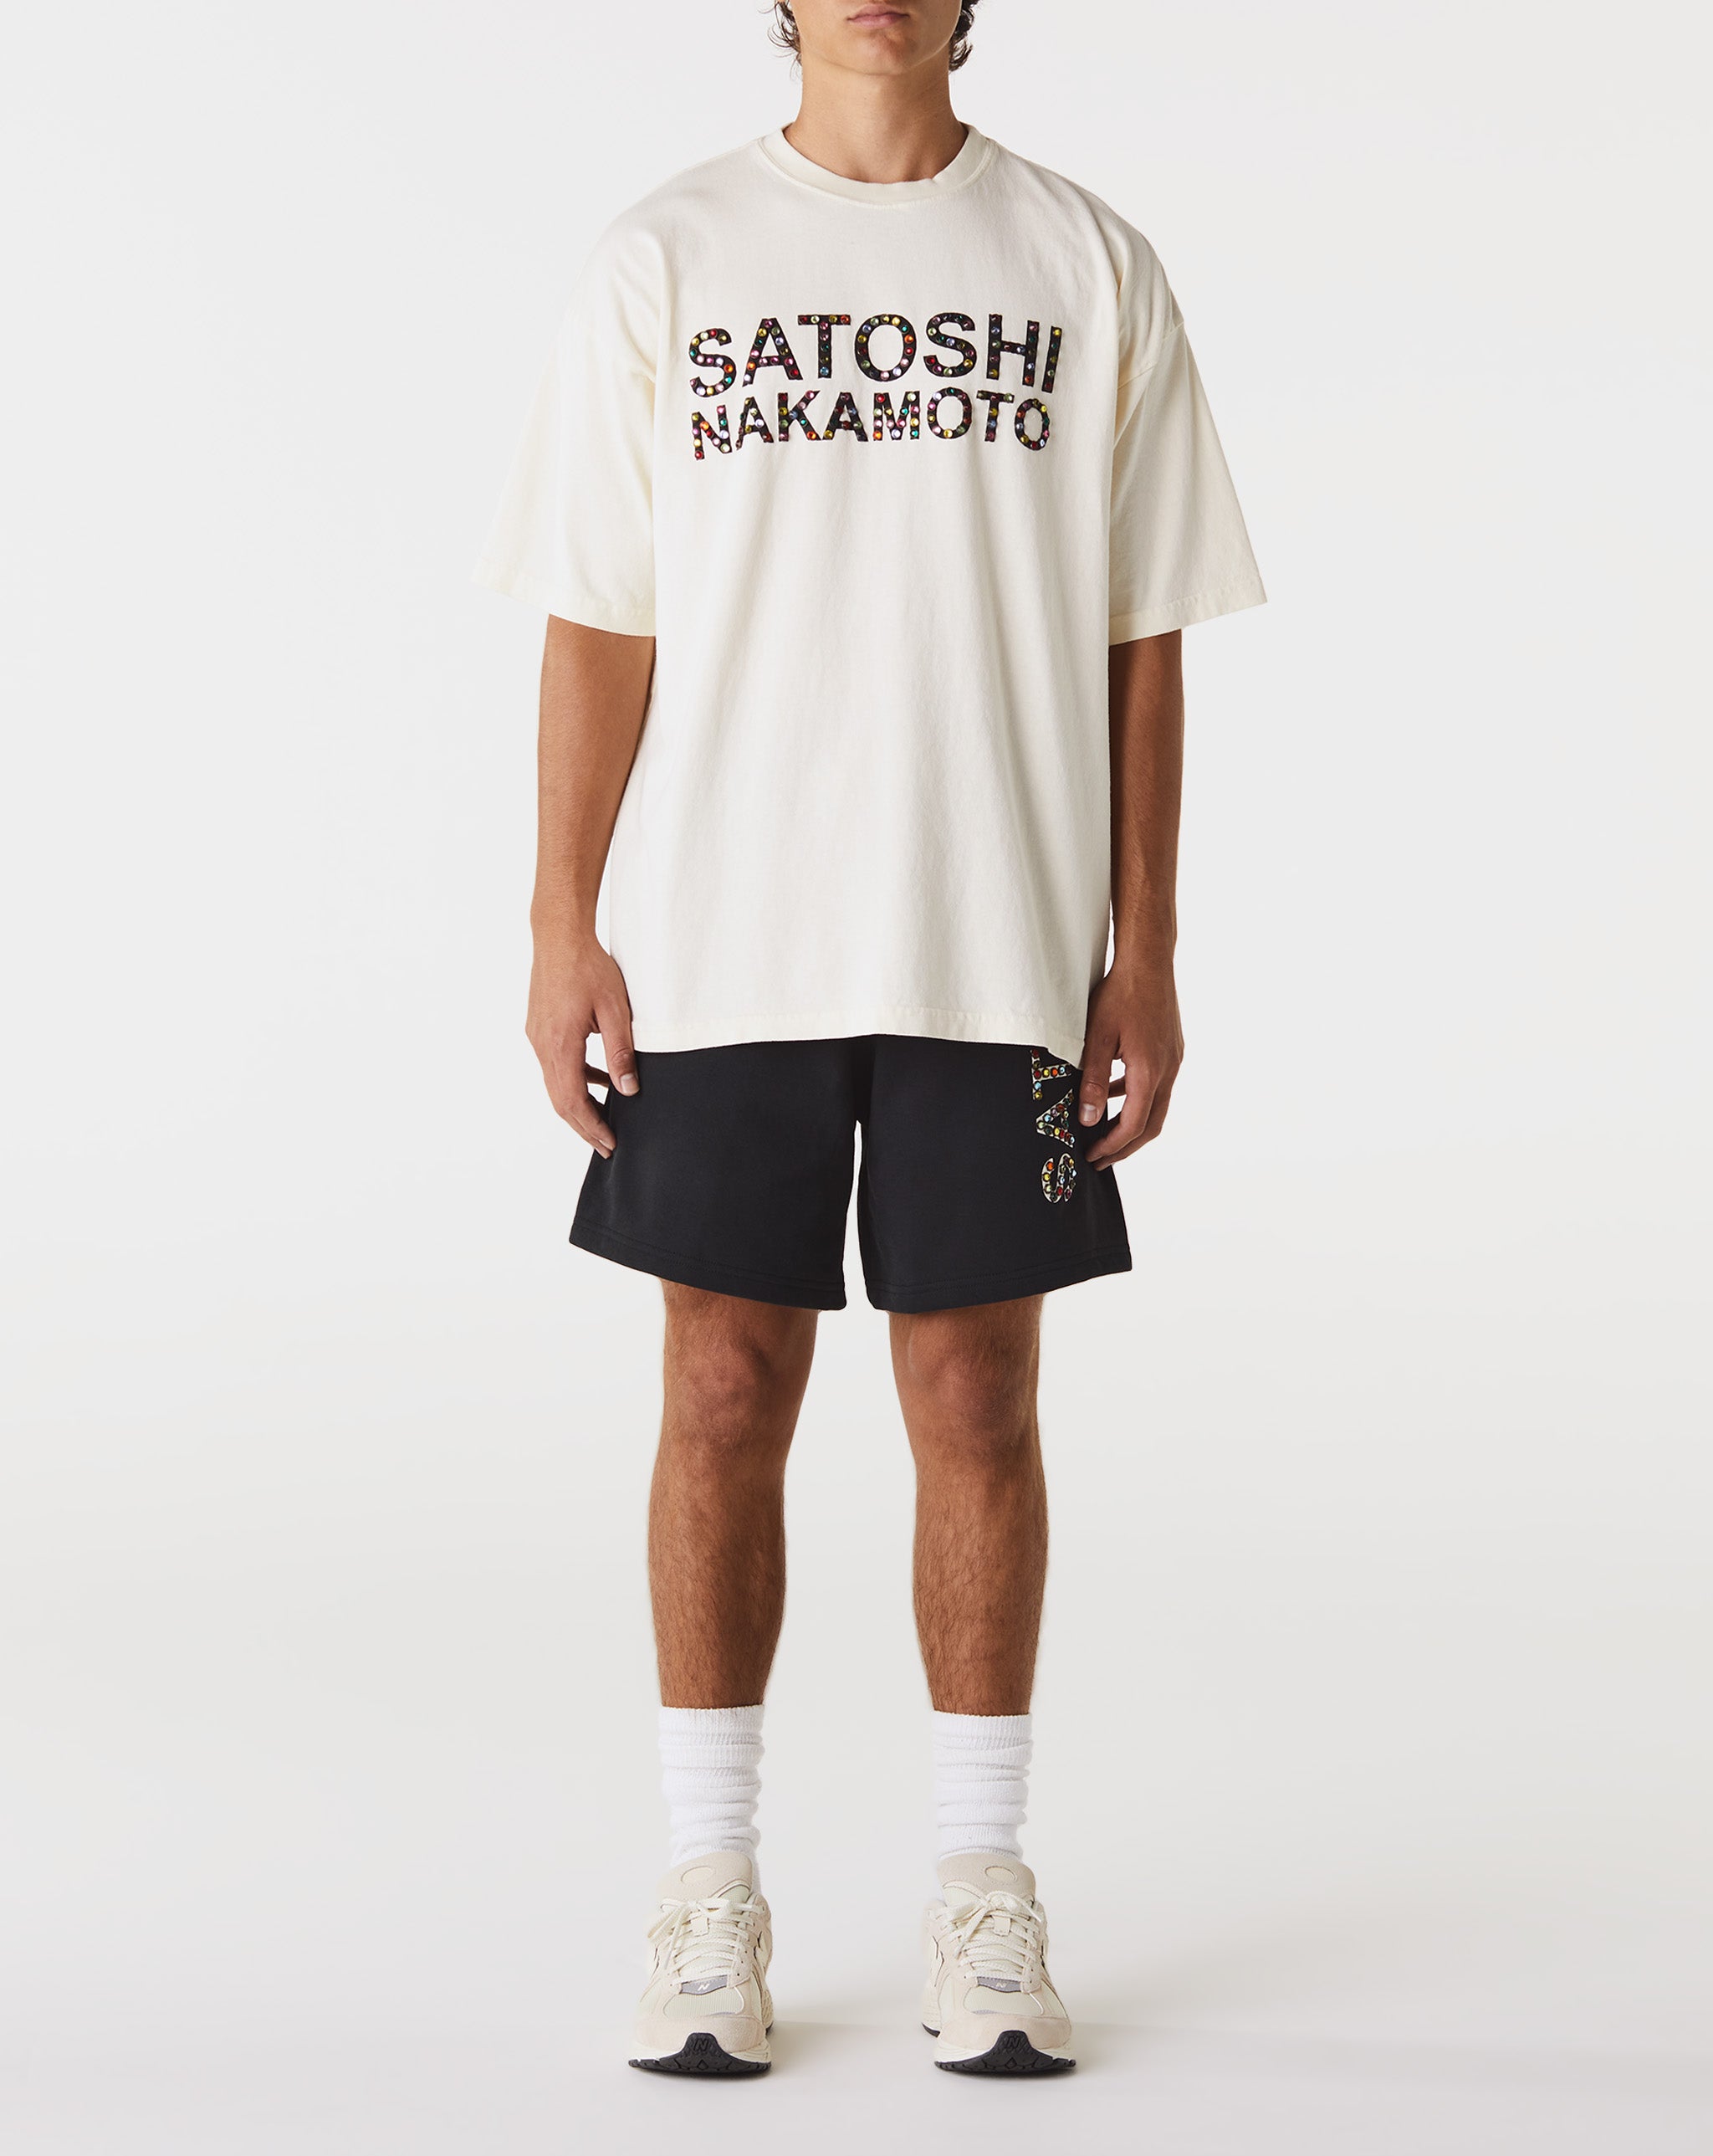 Satoshi Nakamoto Double Knee Shorts  - Cheap Erlebniswelt-fliegenfischen Jordan outlet